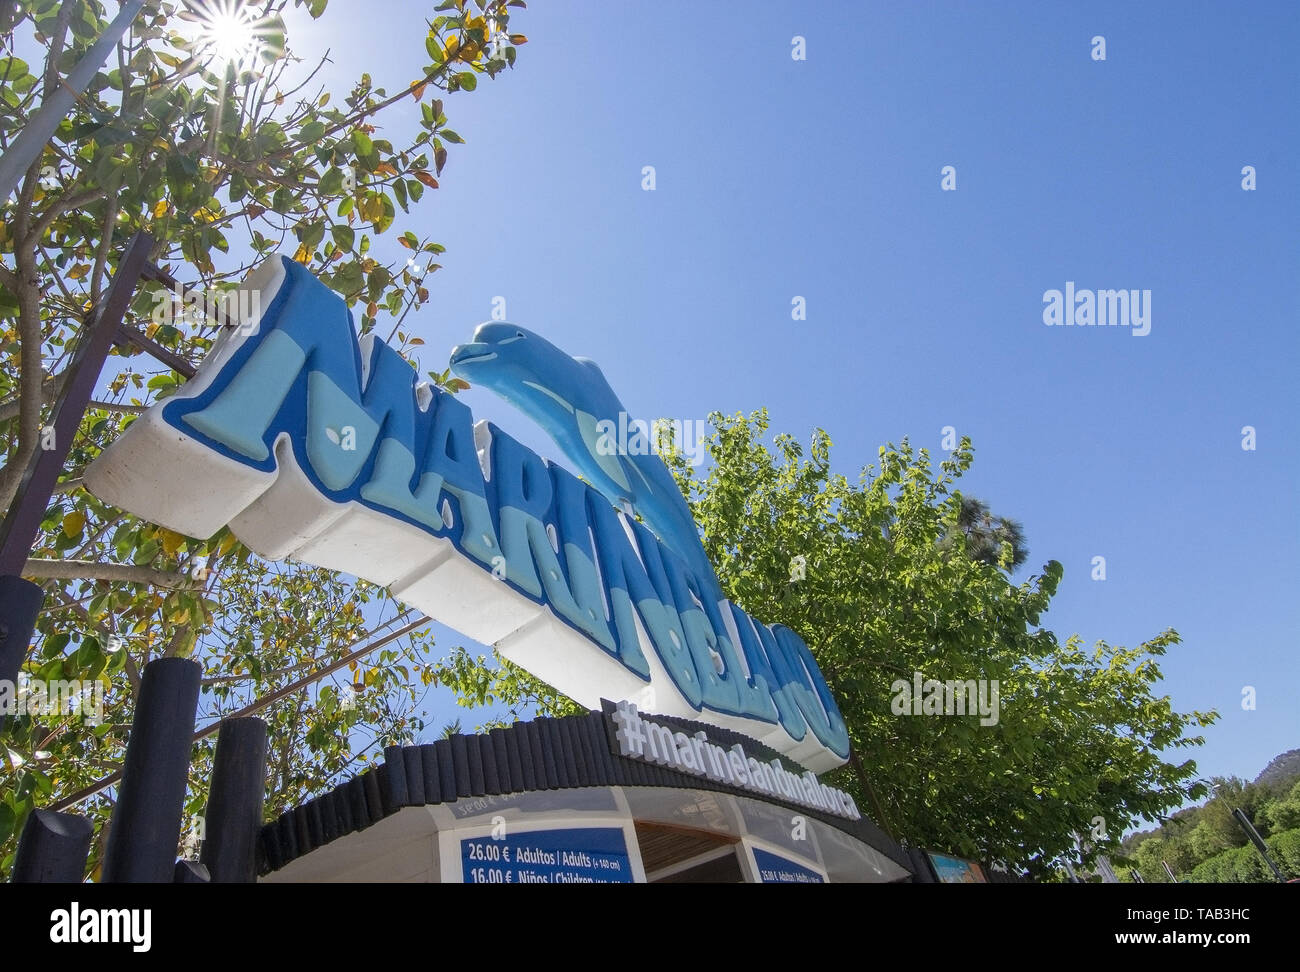 PALMA, MALLORCA, SPAIN - MAY 22, 2019: Entrance sign at Marineland on a sunny day on May 22, 2019 in Palma, Mallorca, Spain. Stock Photo